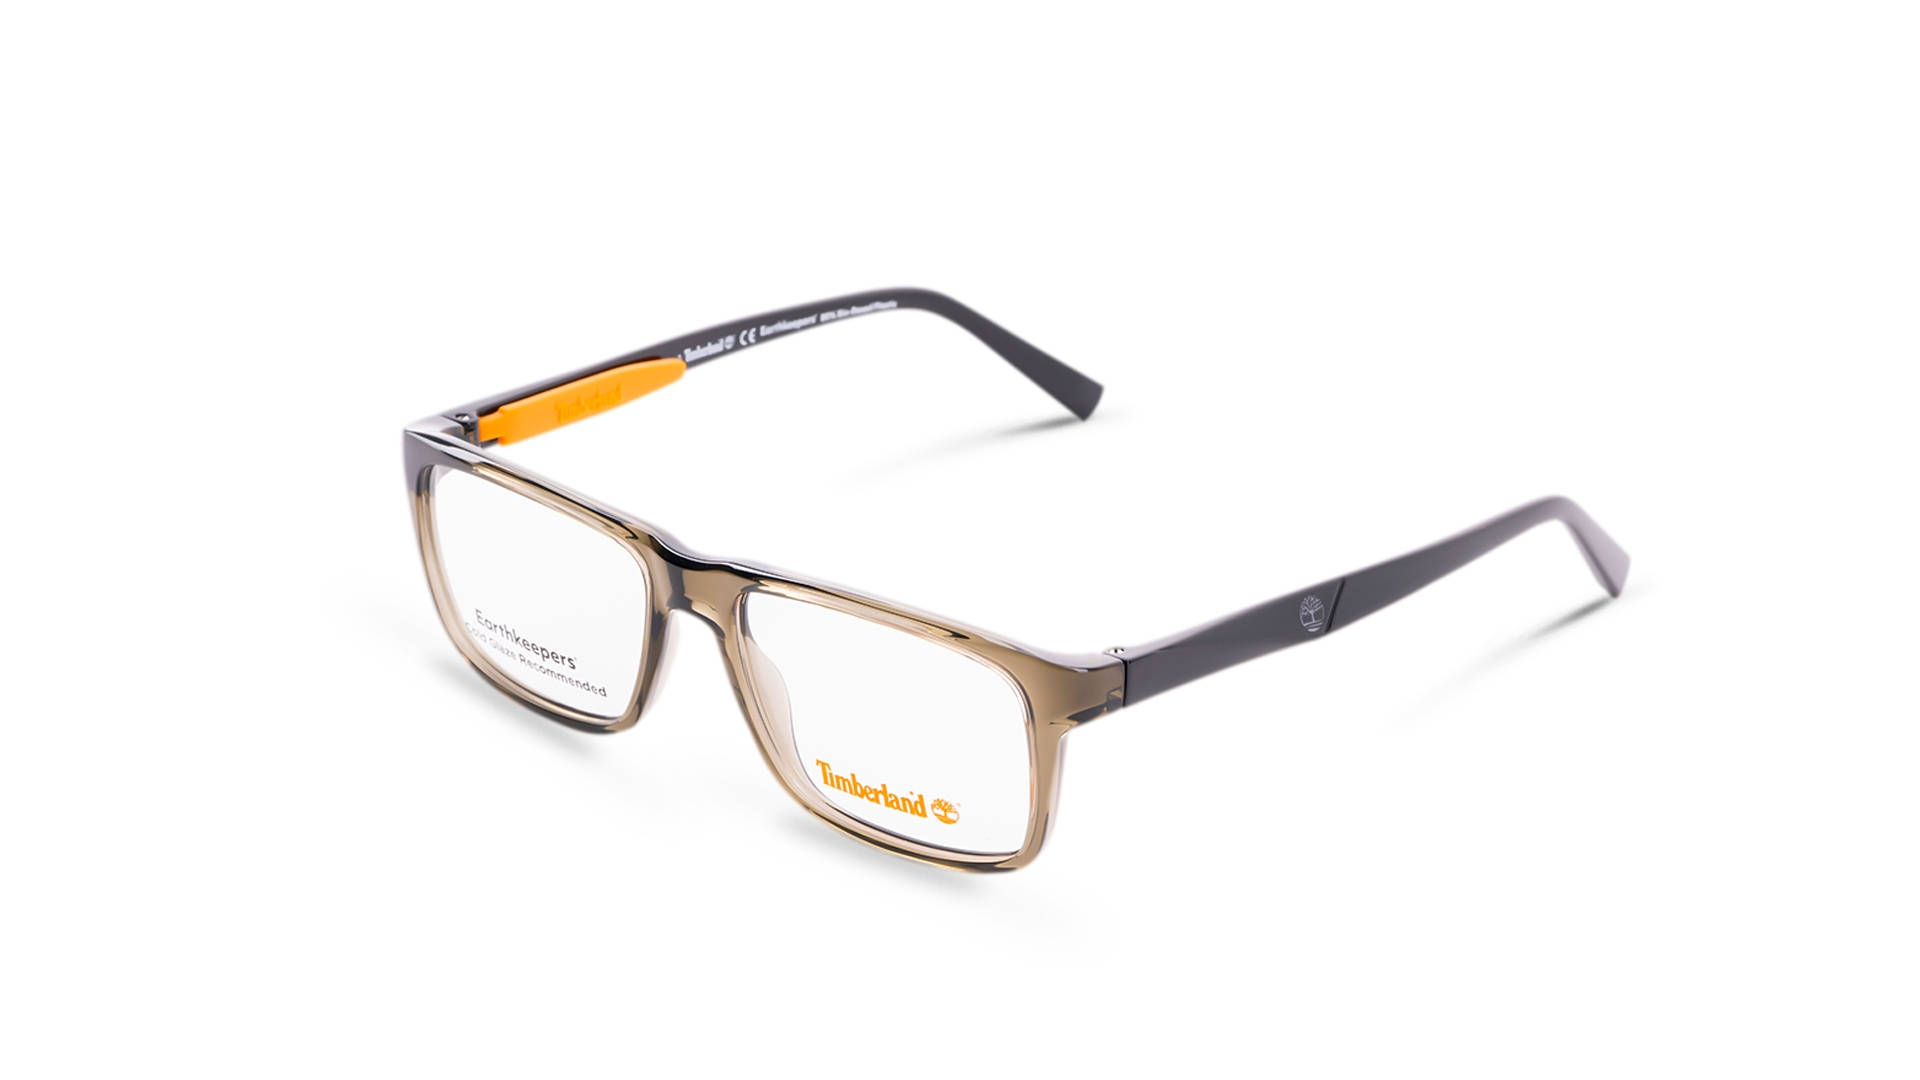 Timberland Eyeglasses Orange And Gray Wallpaper